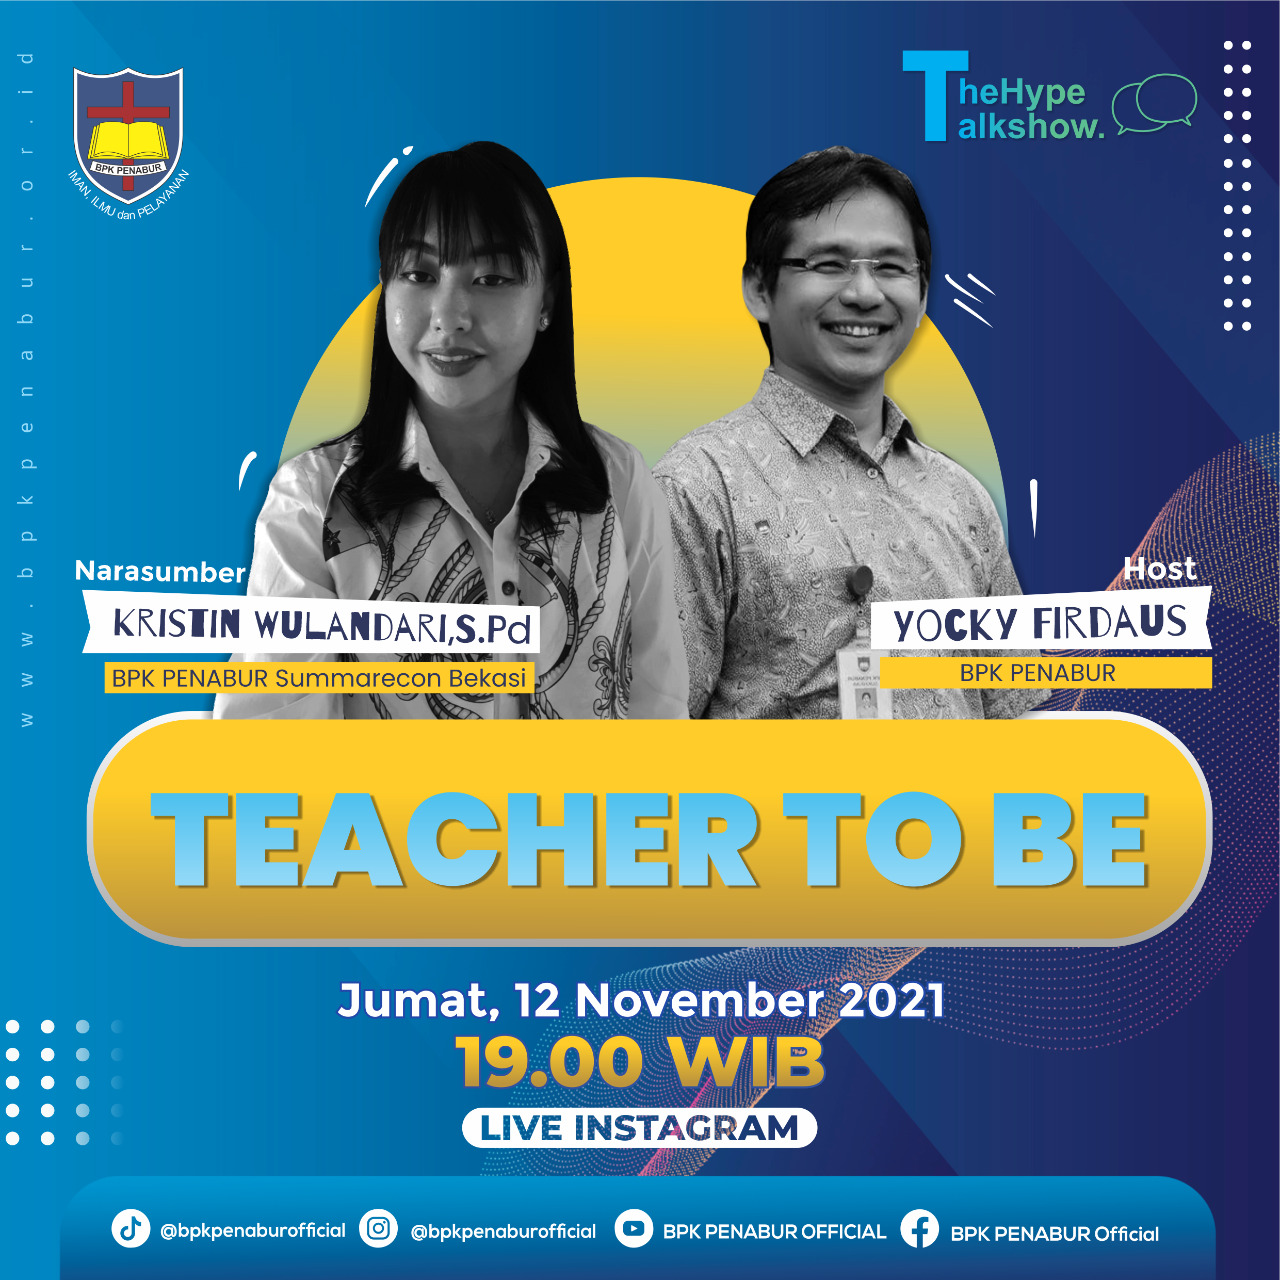 TEACHERS TO BE